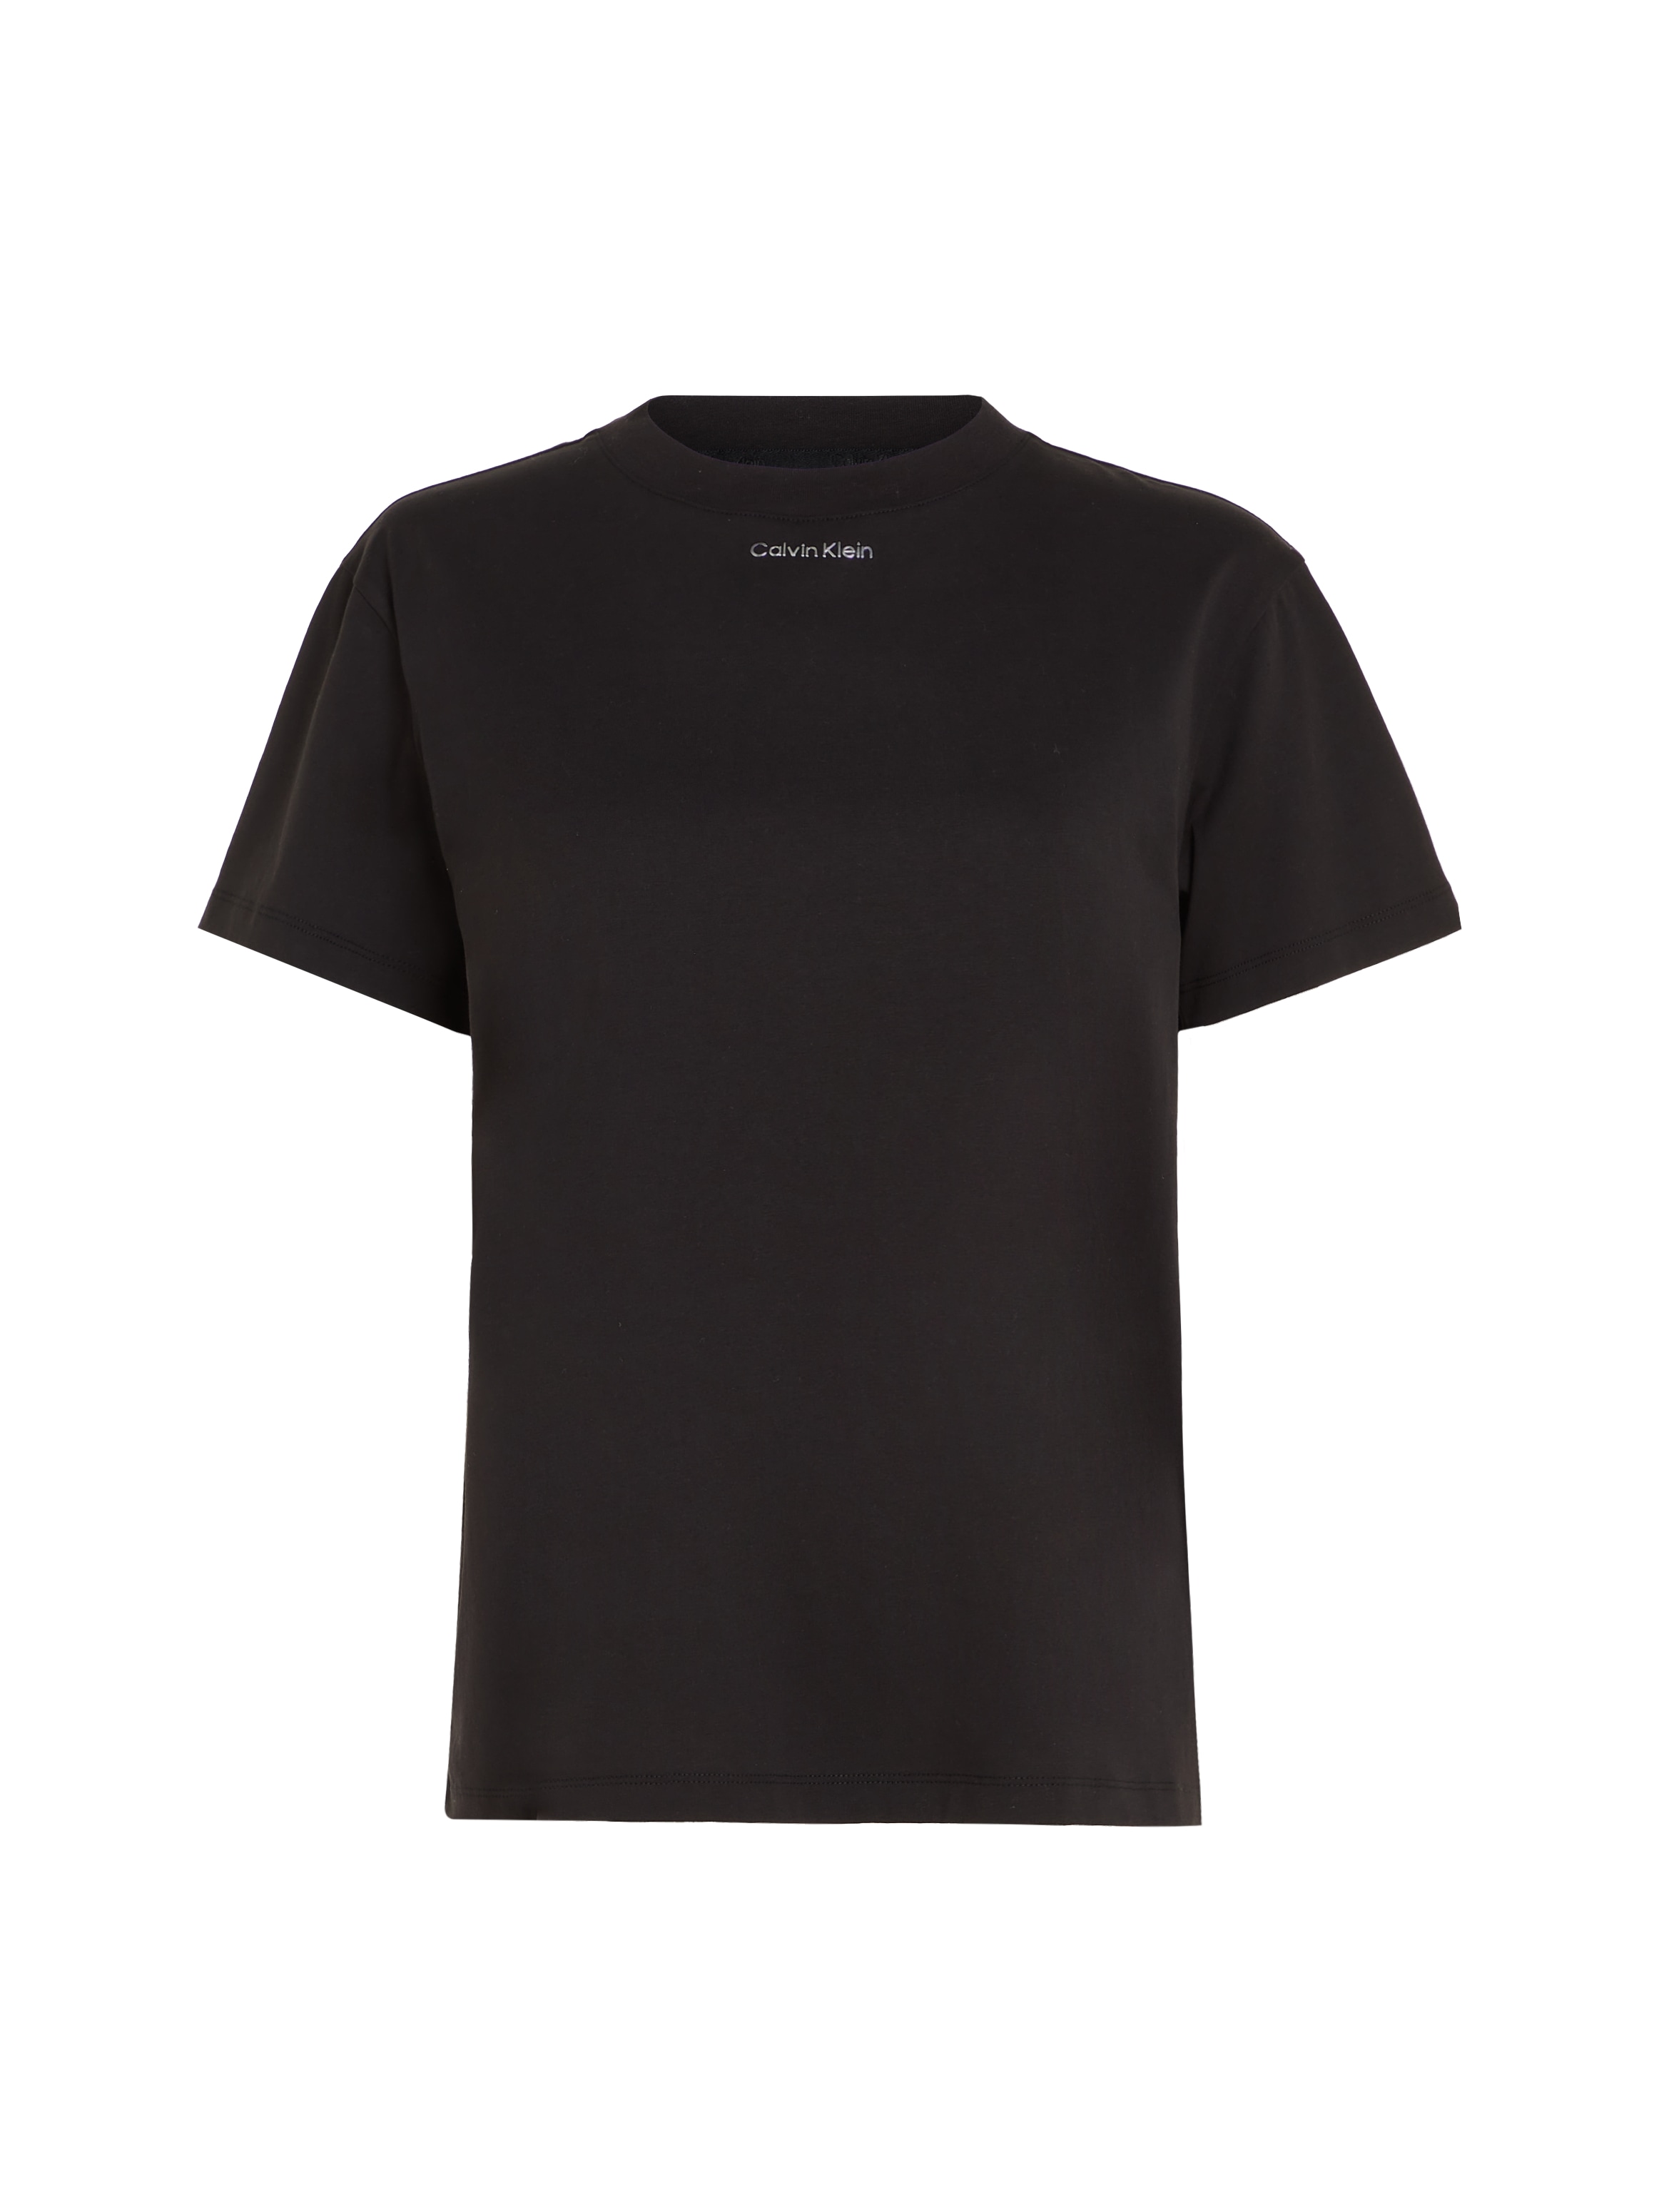 Calvin Klein T-Shirt »METALLIC MICRO OTTO LOGO bei SHIRT« kaufen T